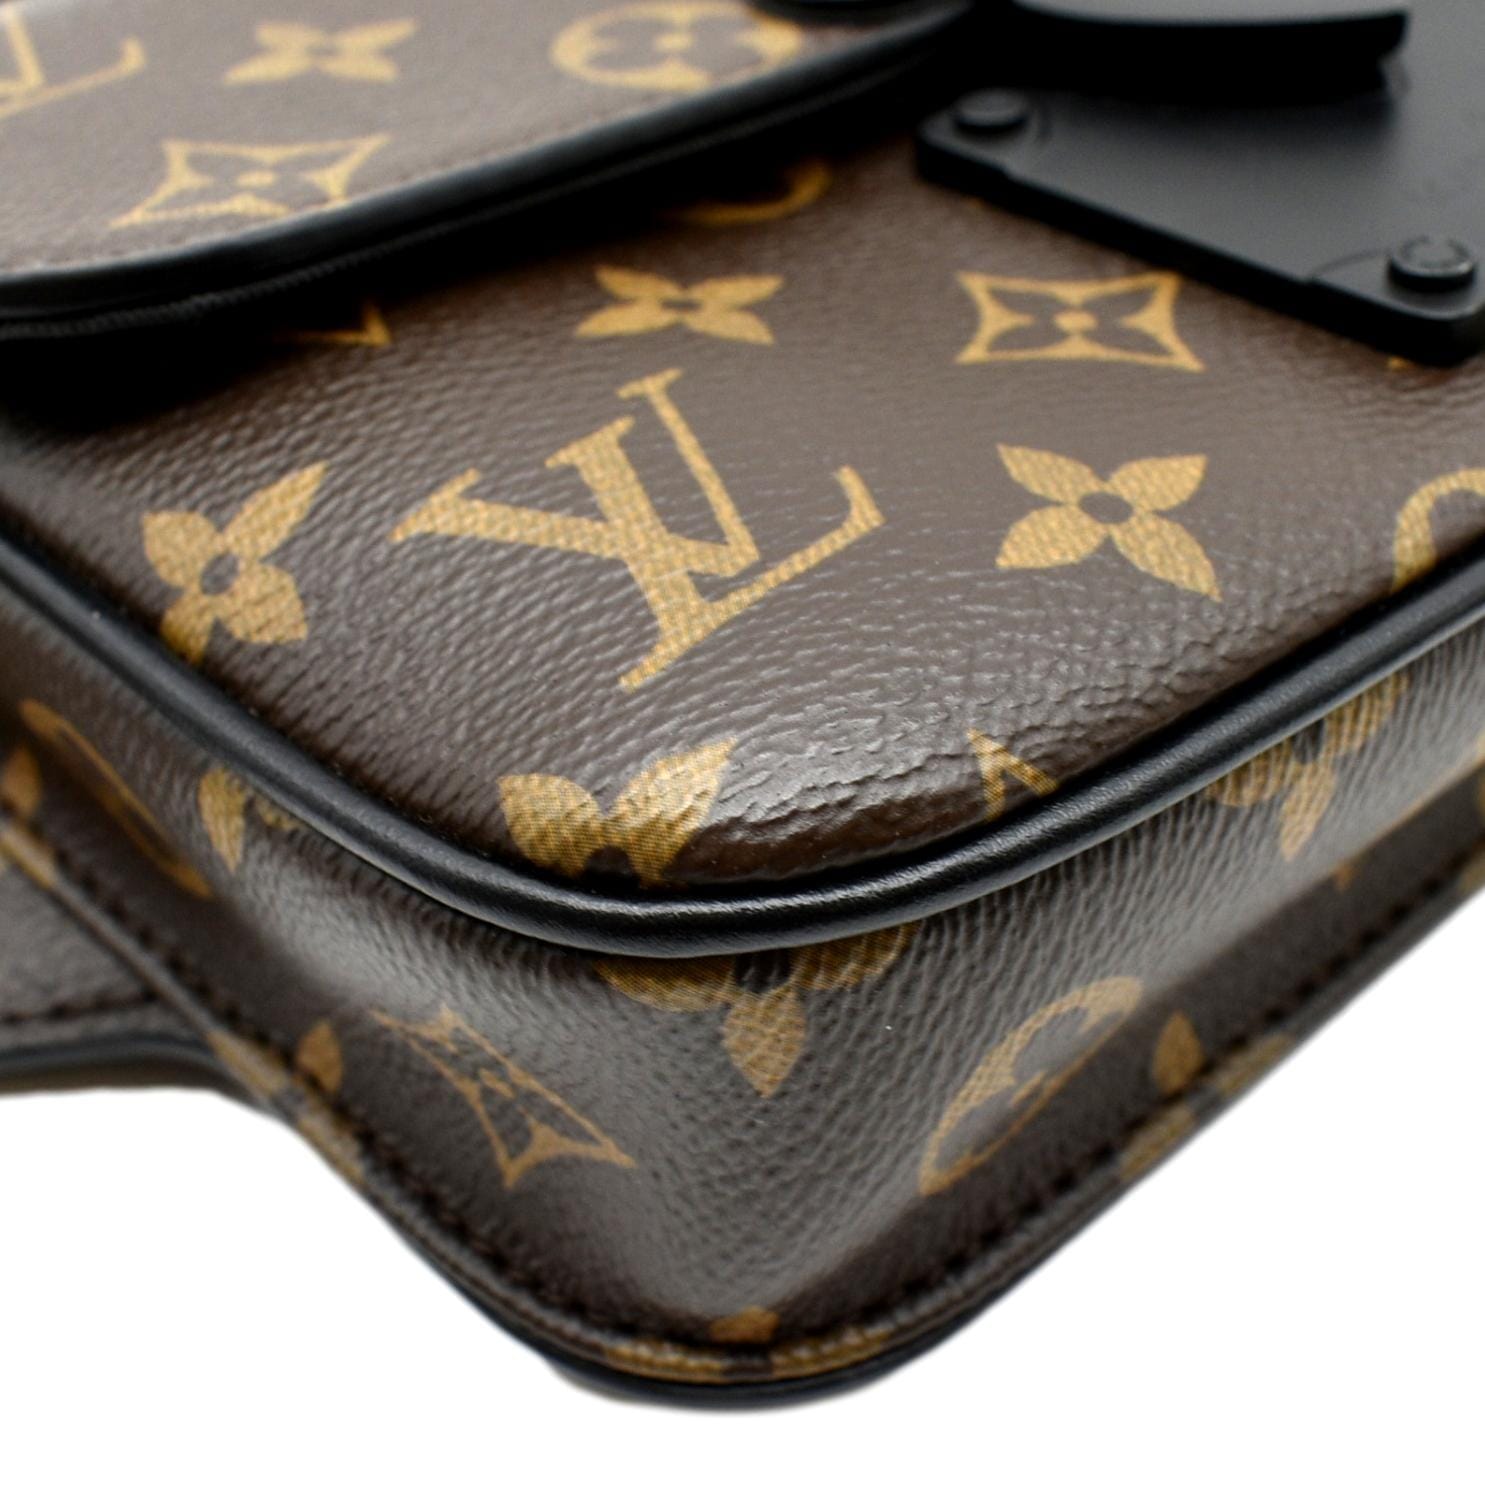 Louis Vuitton - S Lock Messenger Bag - Monogram Canvas - Men - Luxury